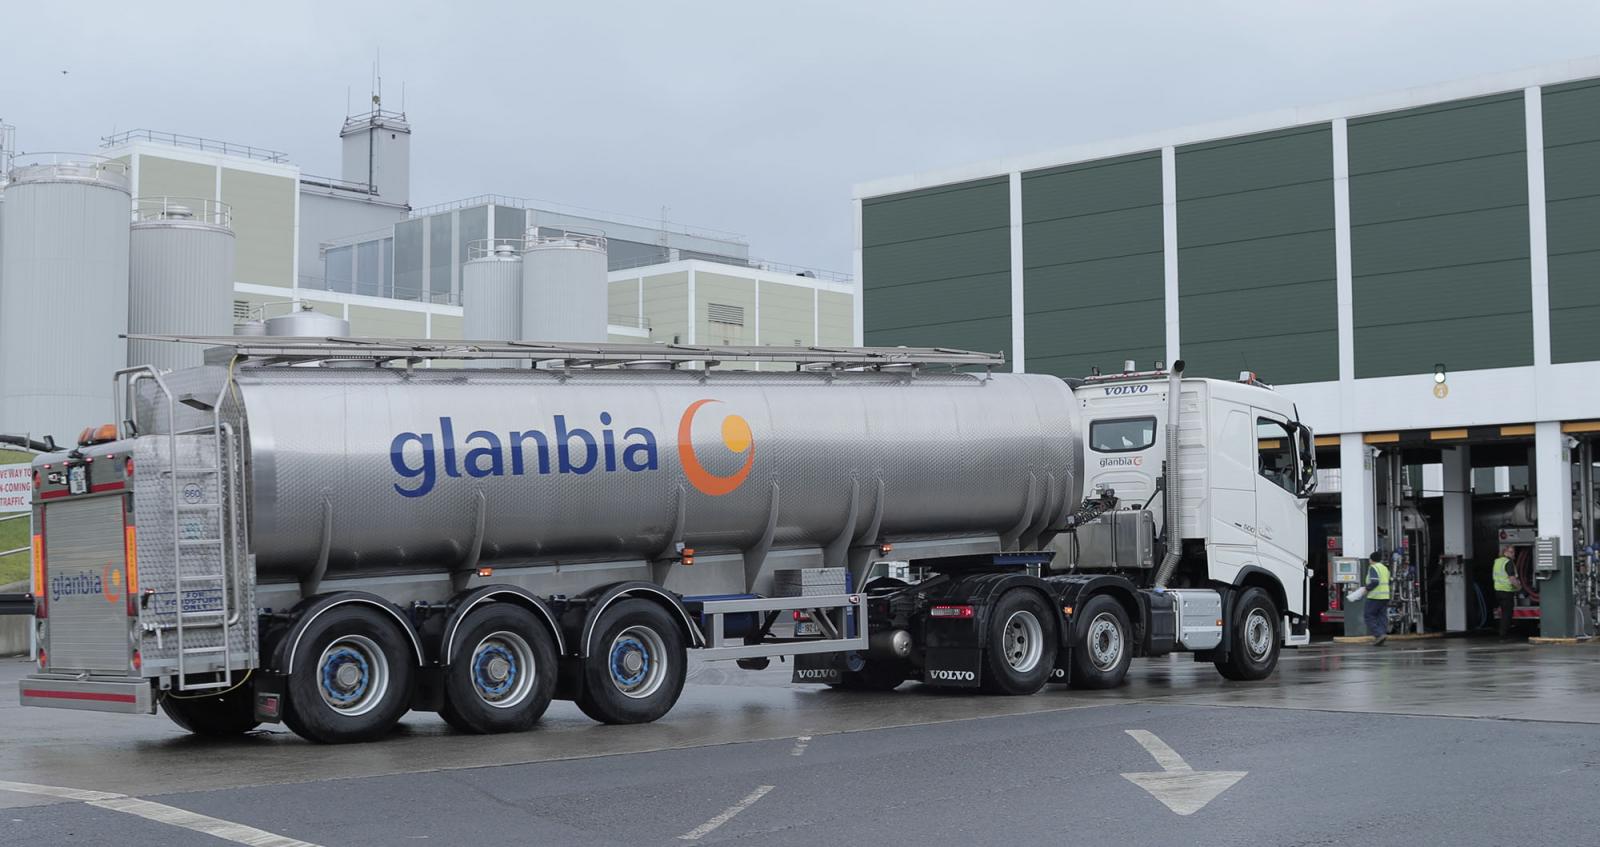 Glanbia Ireland truck arriving at Ballyraggart